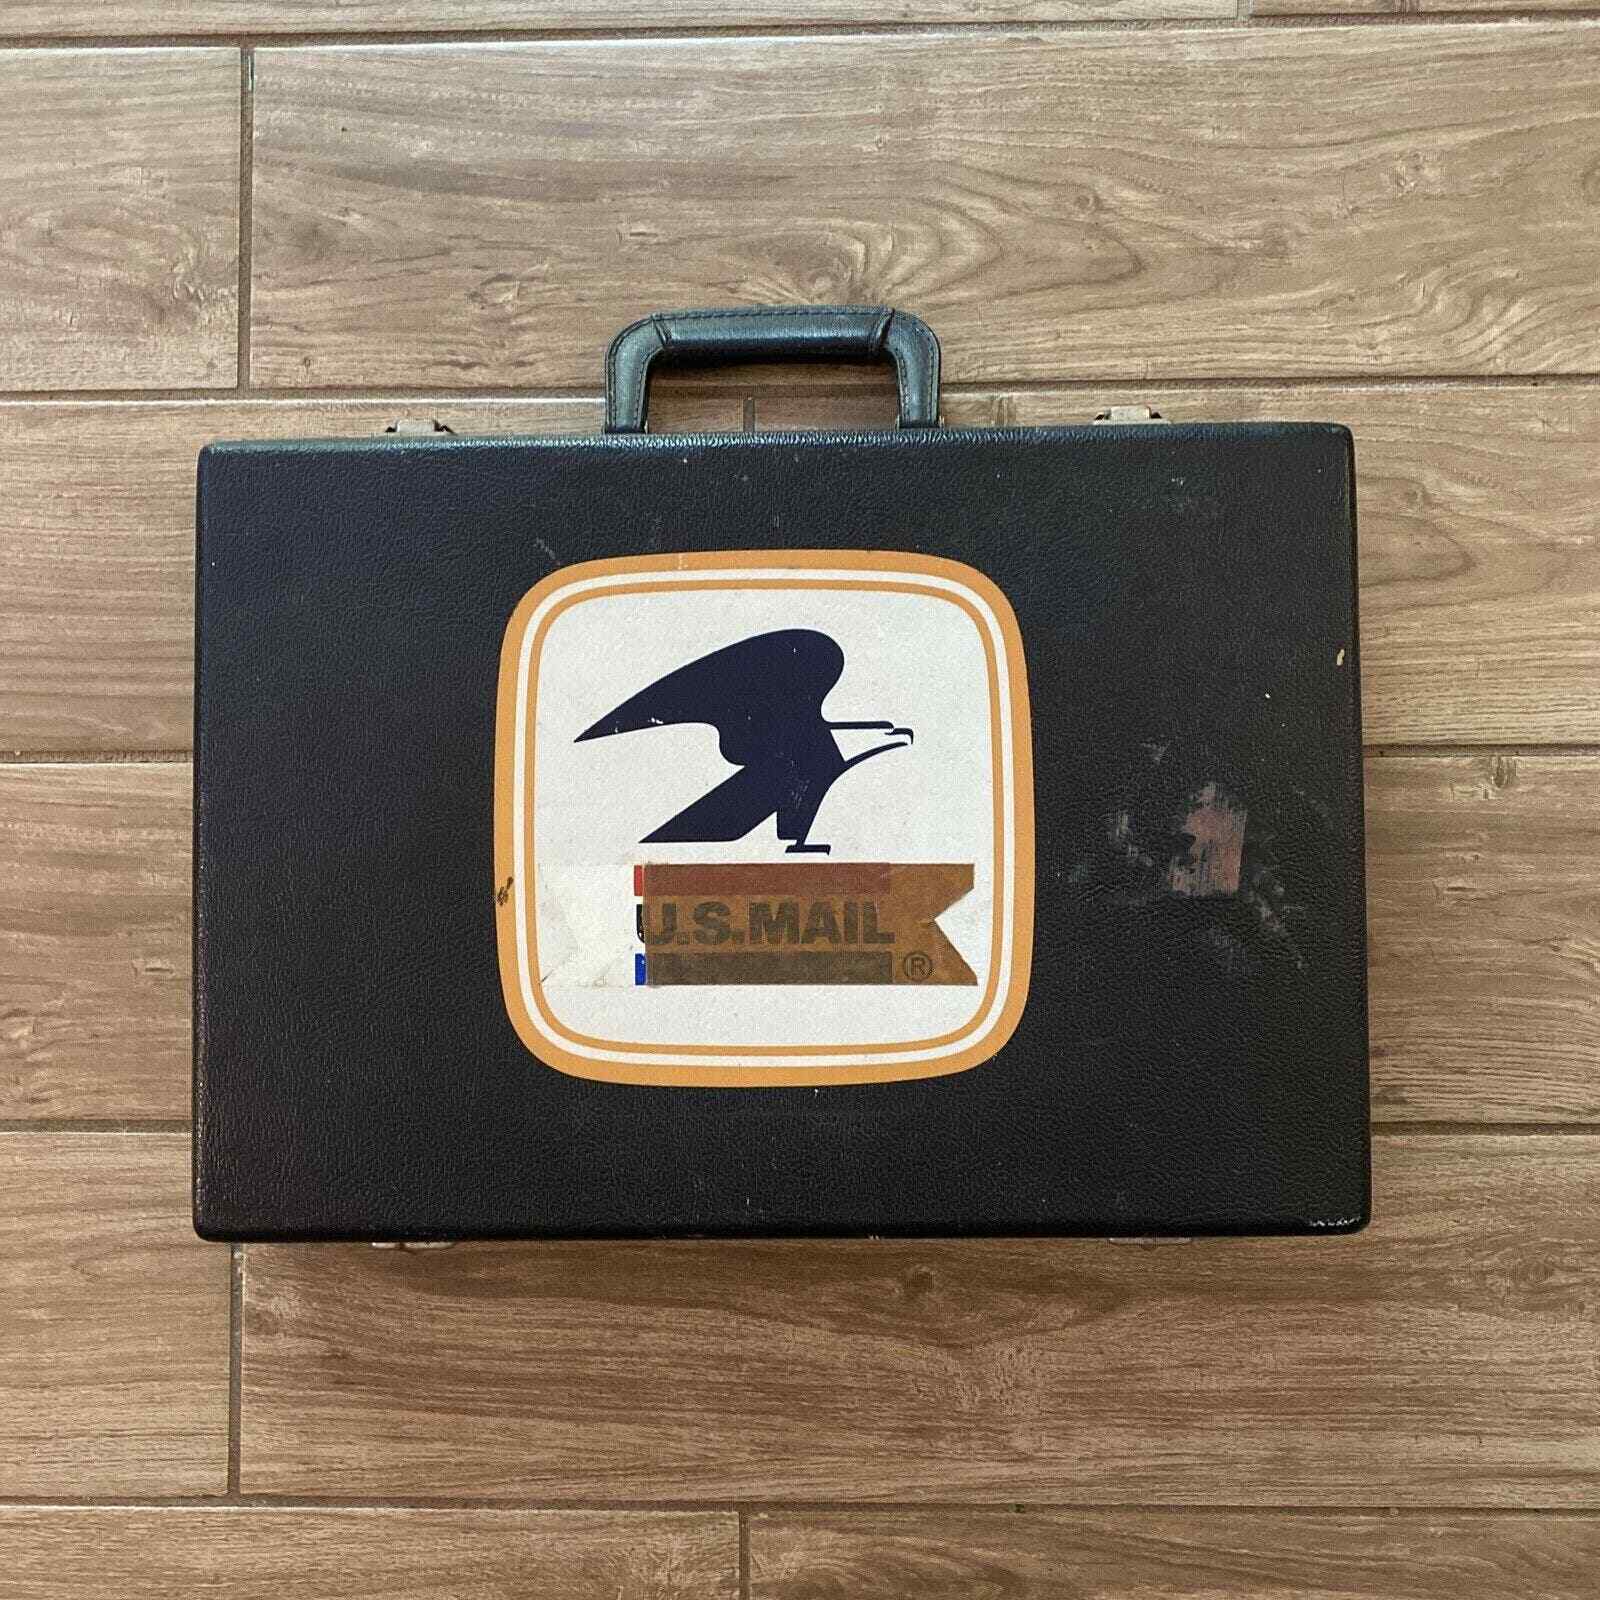 RARE Vintage US Mail Heavy Duty Hard Case Suitcase Bag